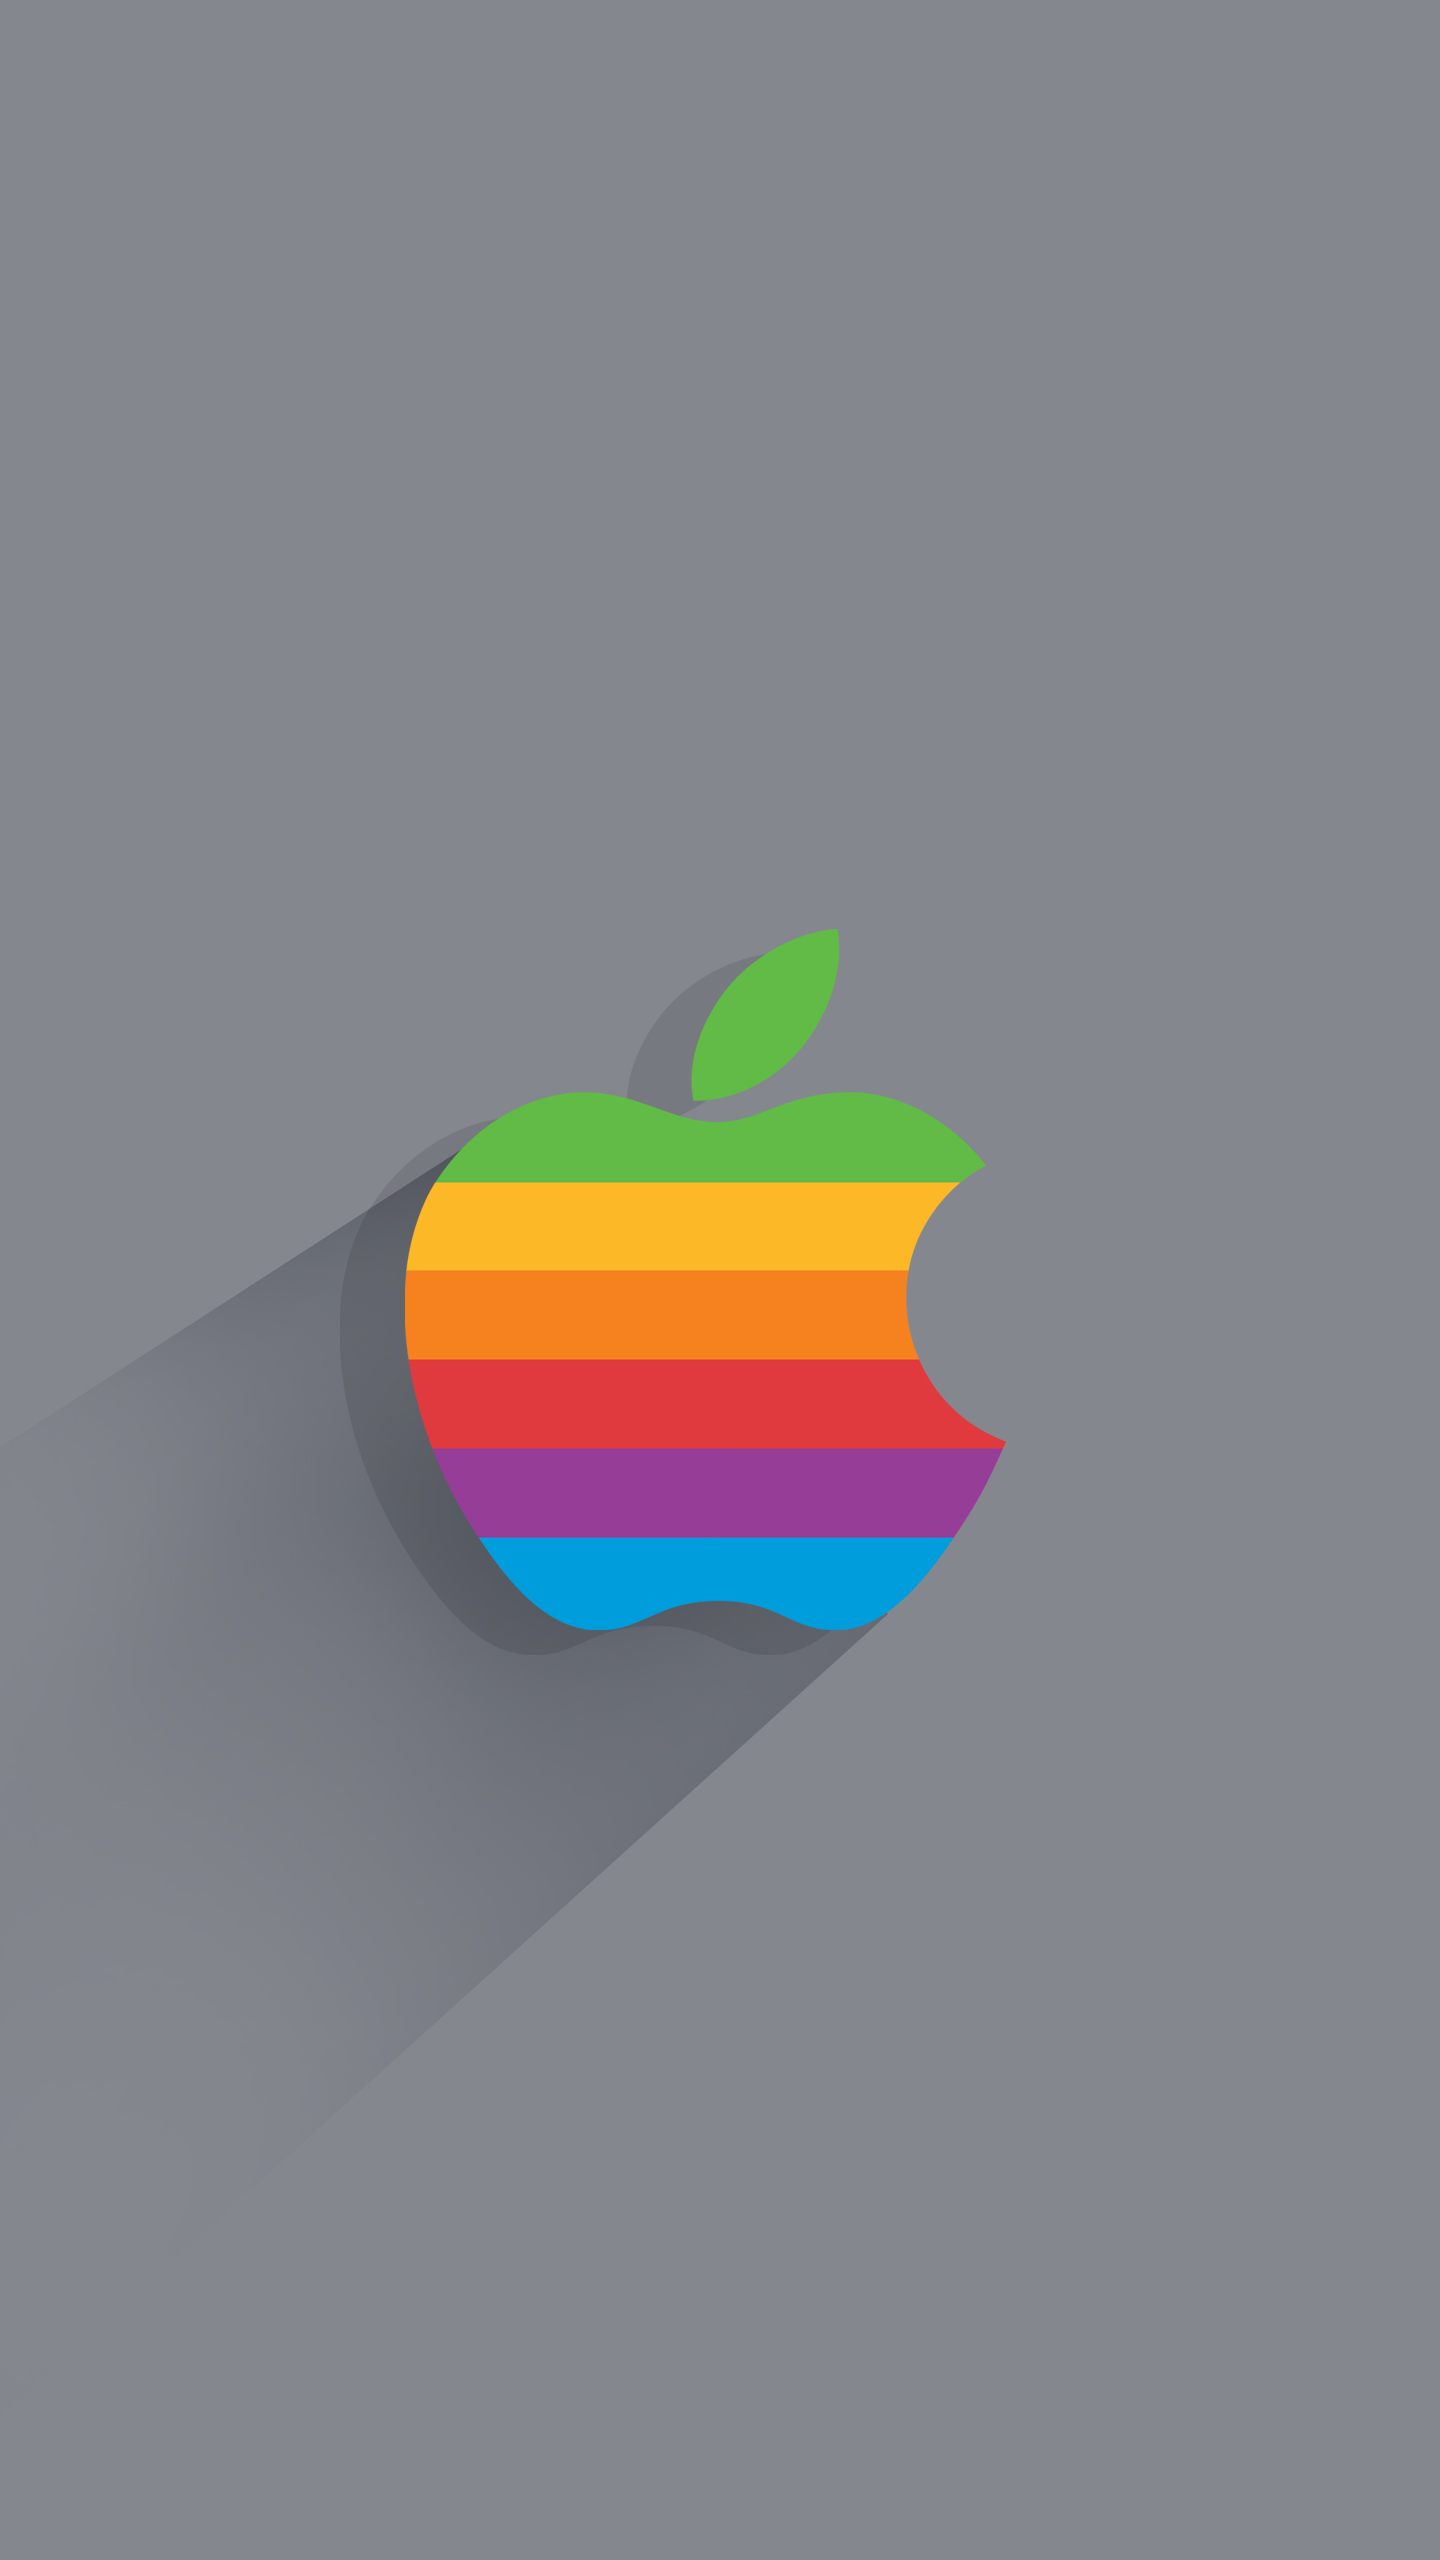 Apple Logo Wallpaper iPhone 6S Plus by lirking20 on DeviantArt